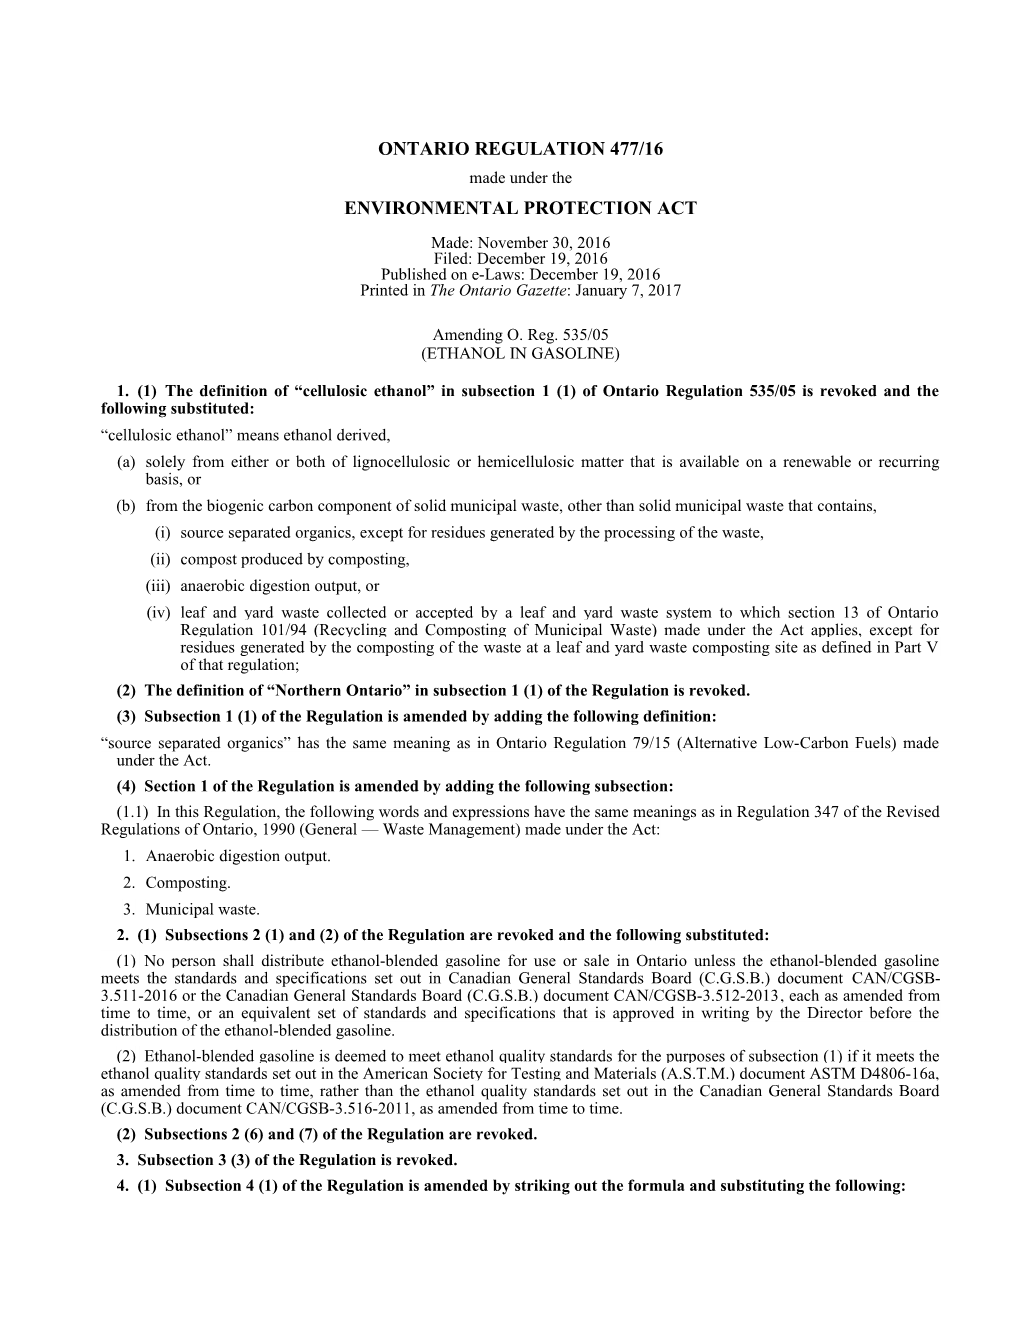 ENVIRONMENTAL PROTECTION ACT - O. Reg. 477/16